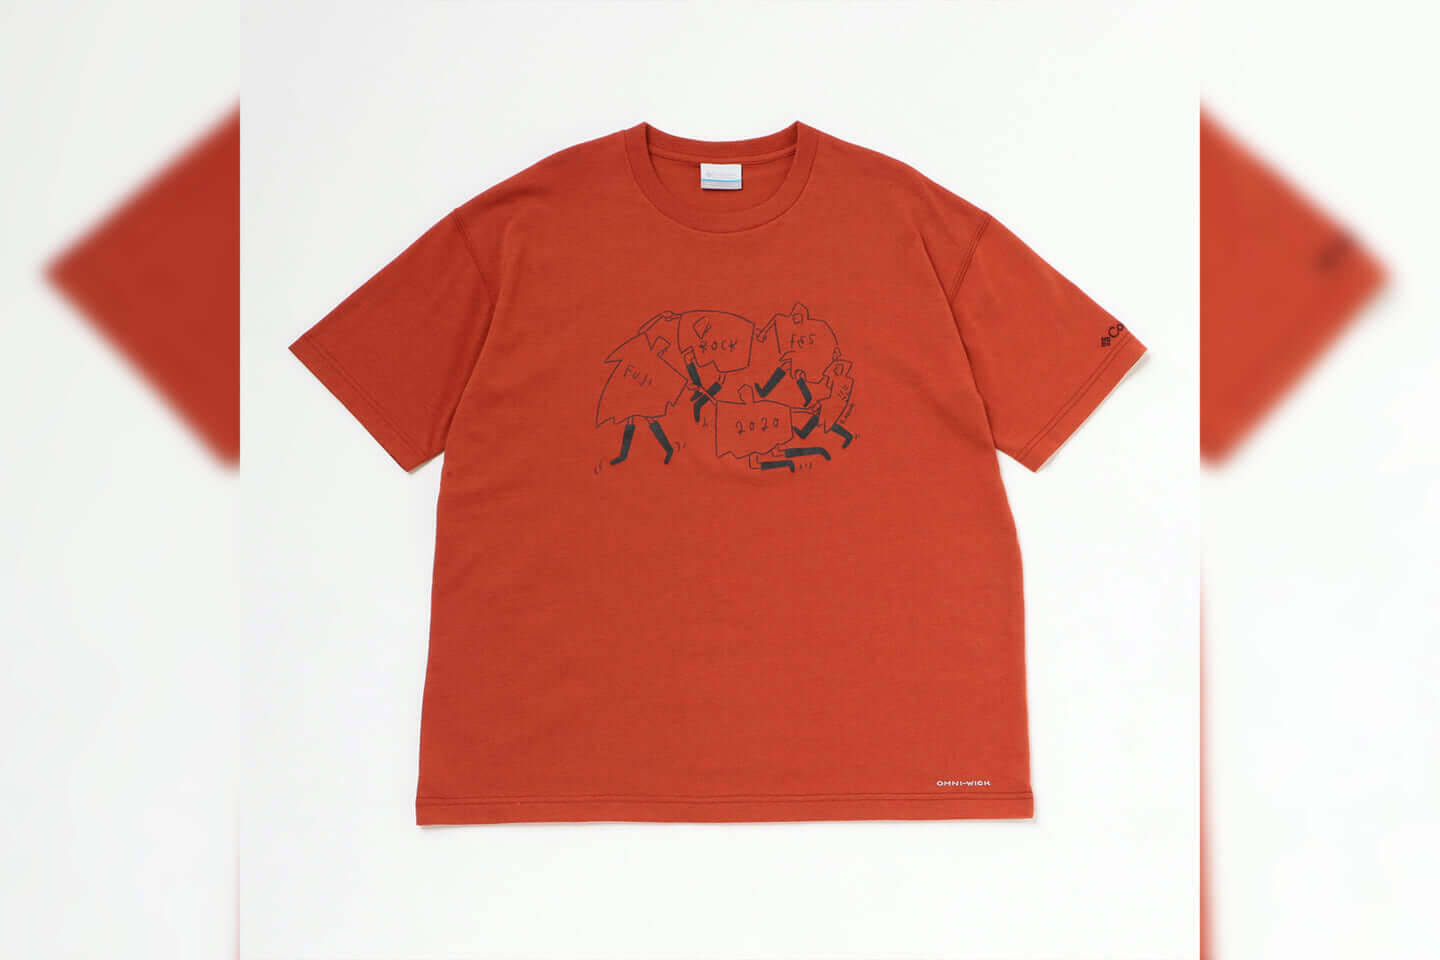 Columbiaと Fuji Rock Festival がコラボ 長場雄のイラストが描かれた機能的なtシャツが登場 年6月30日 エキサイトニュース